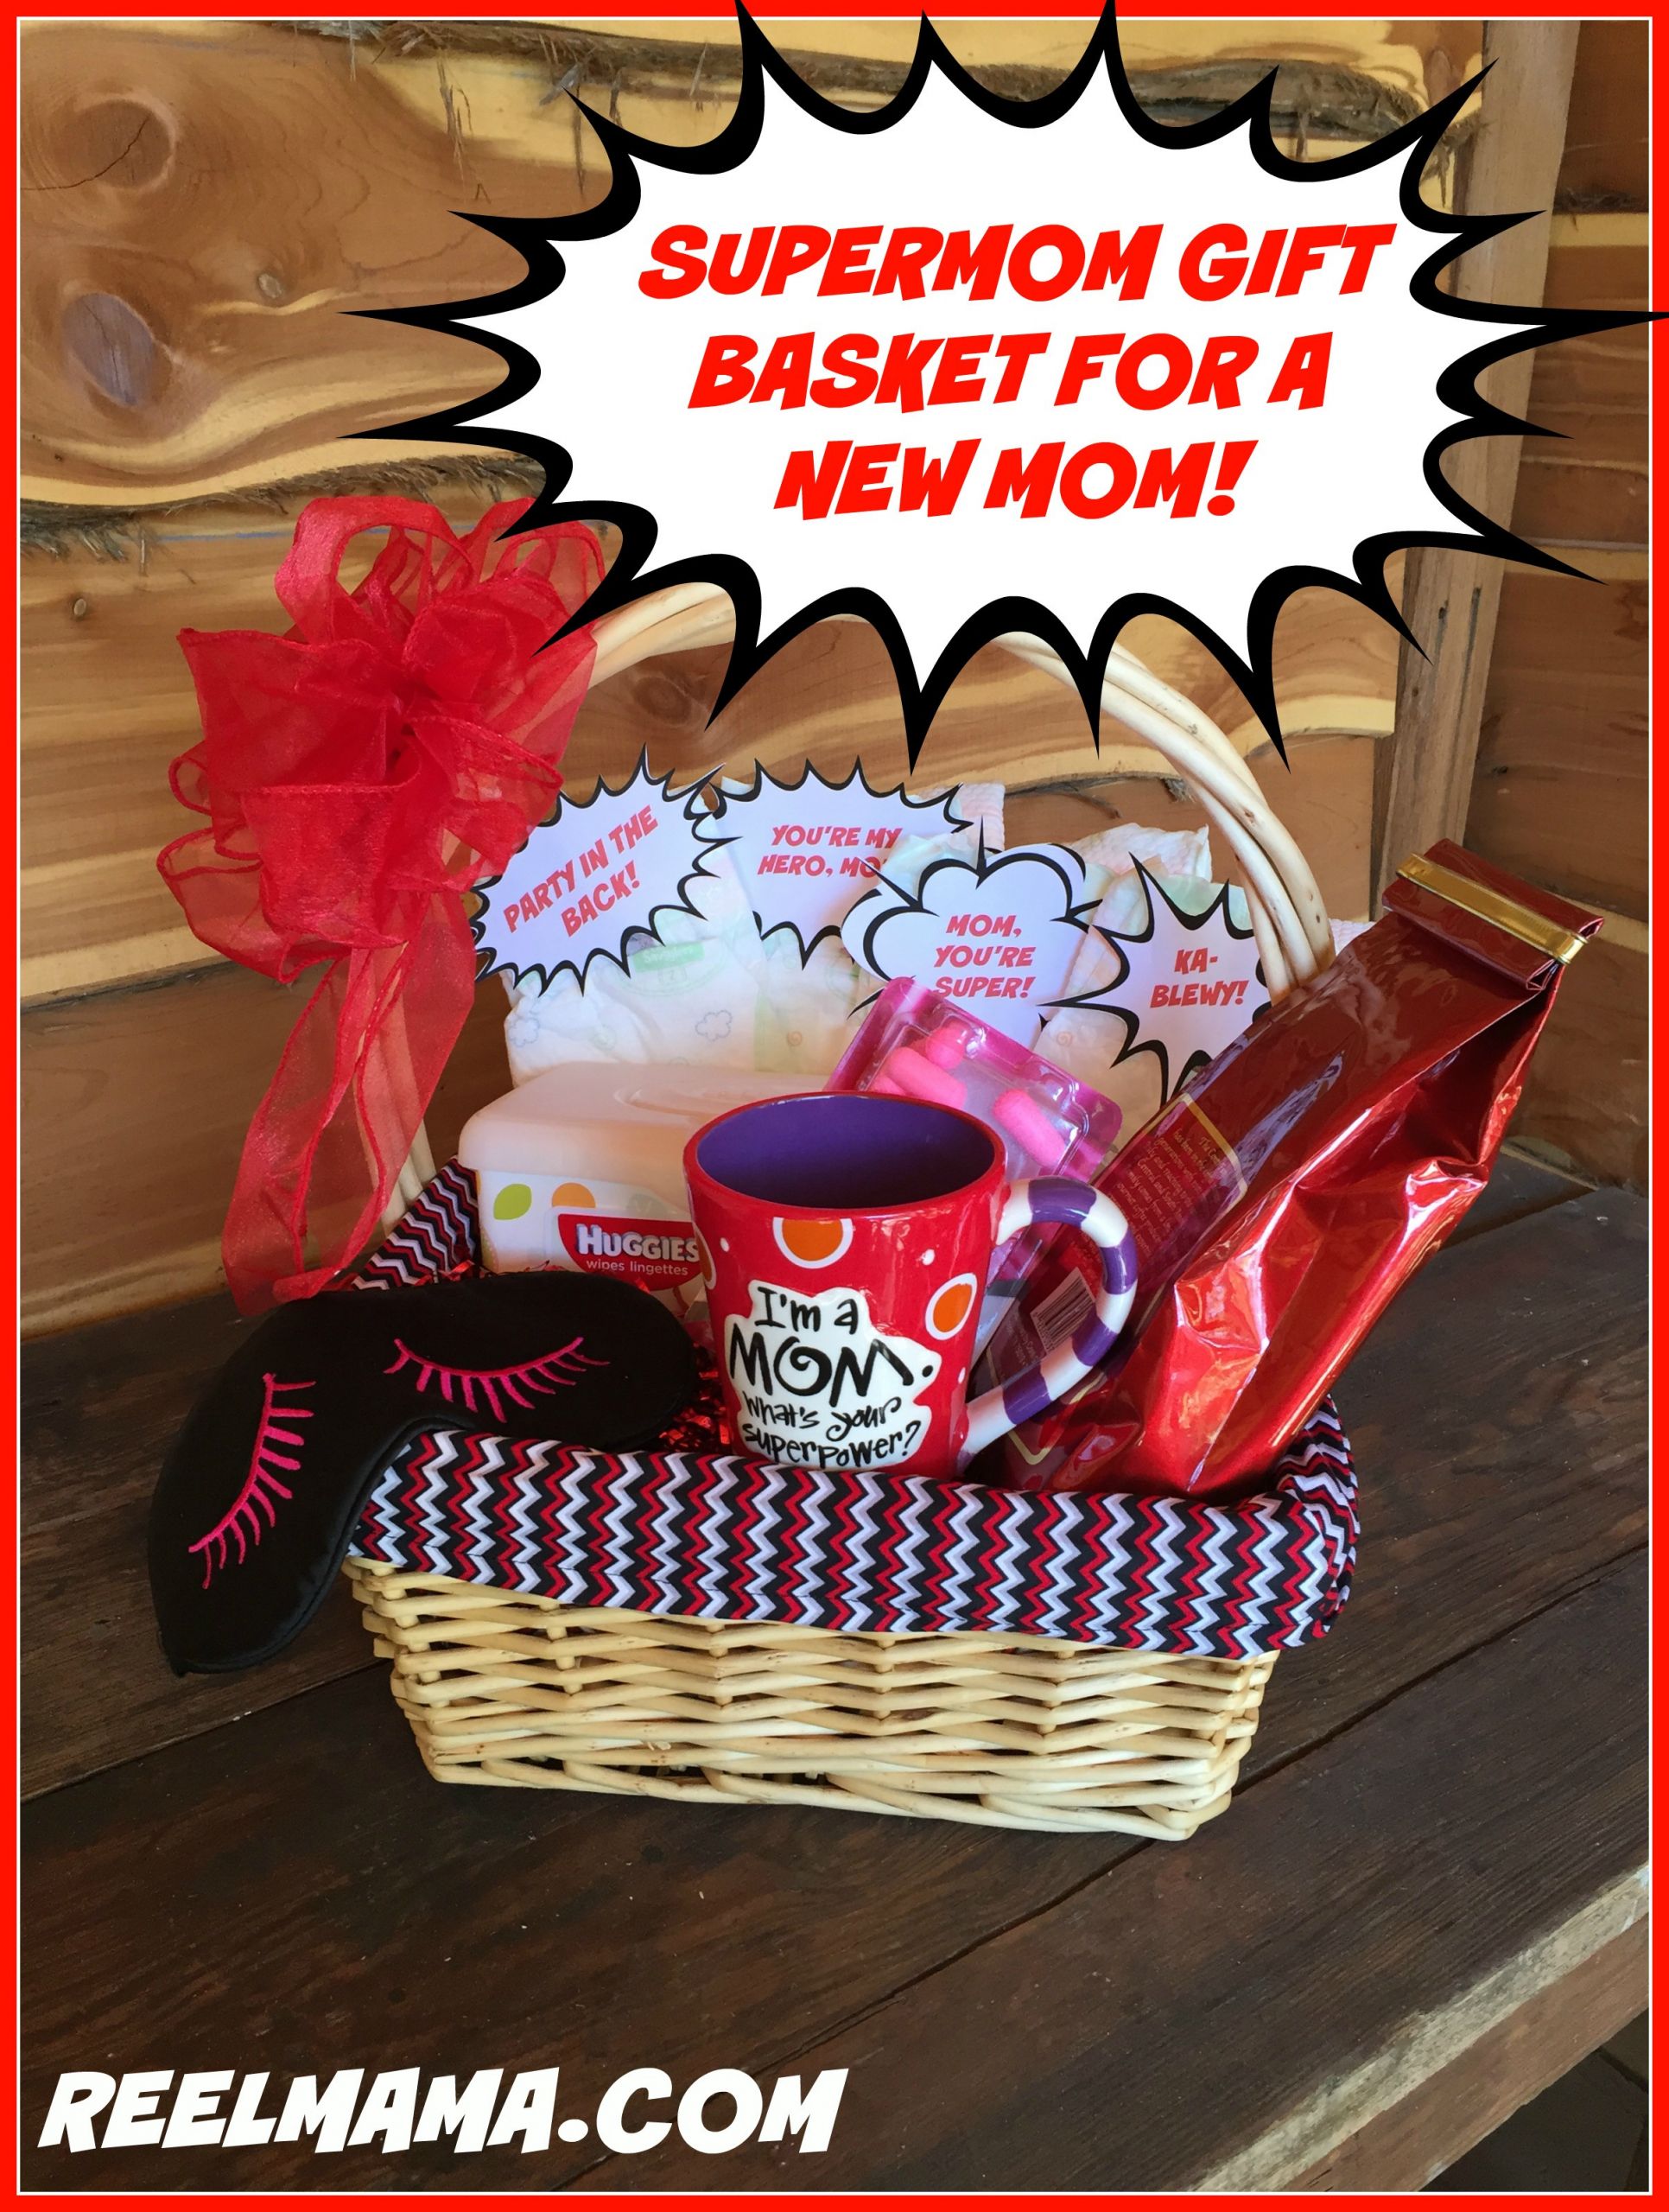 New Mom Gift Basket Ideas
 Supermom t basket for a new mom Reelmama